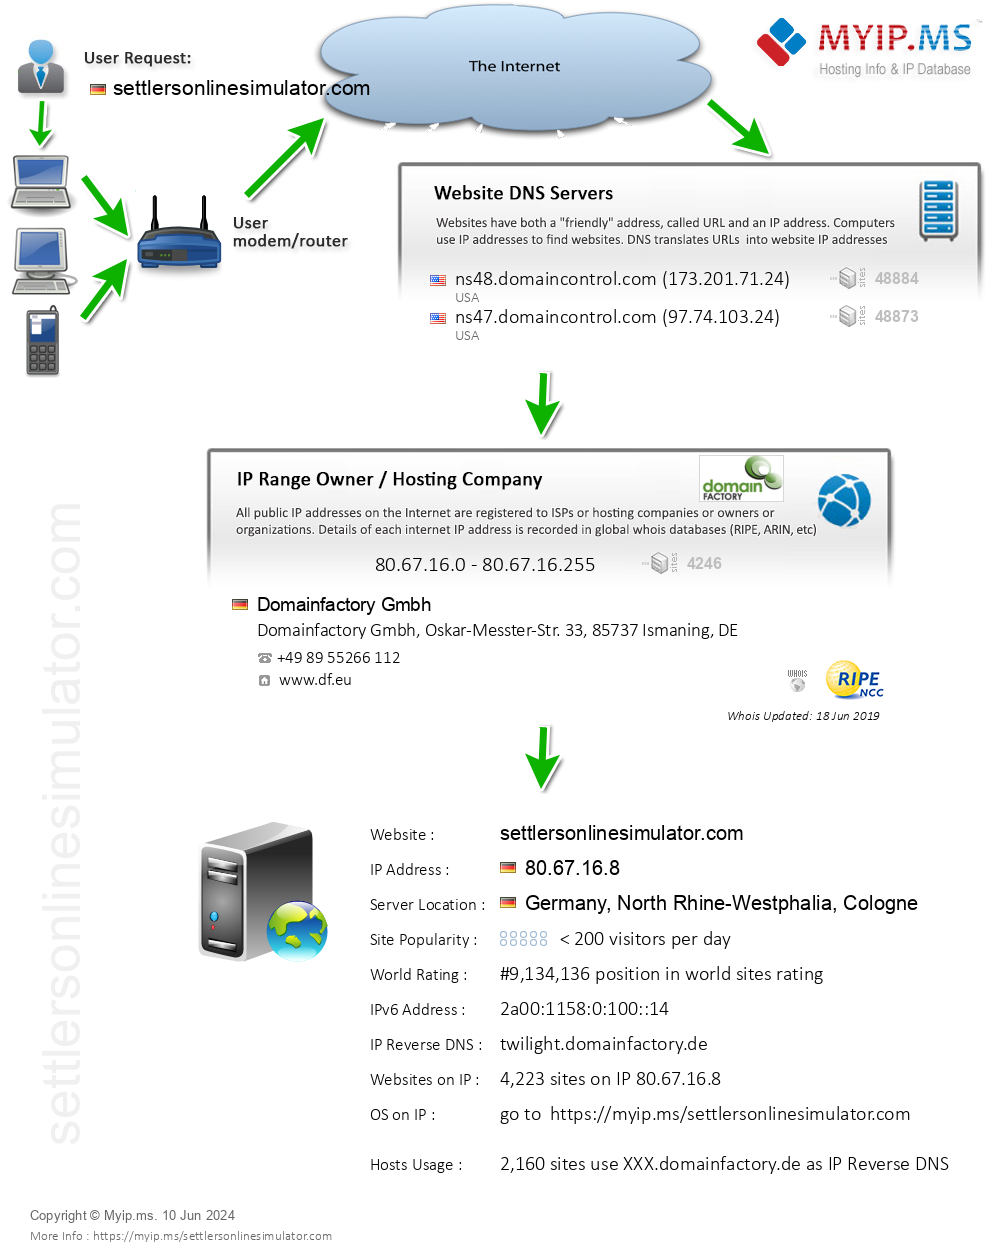 Settlersonlinesimulator.com - Website Hosting Visual IP Diagram